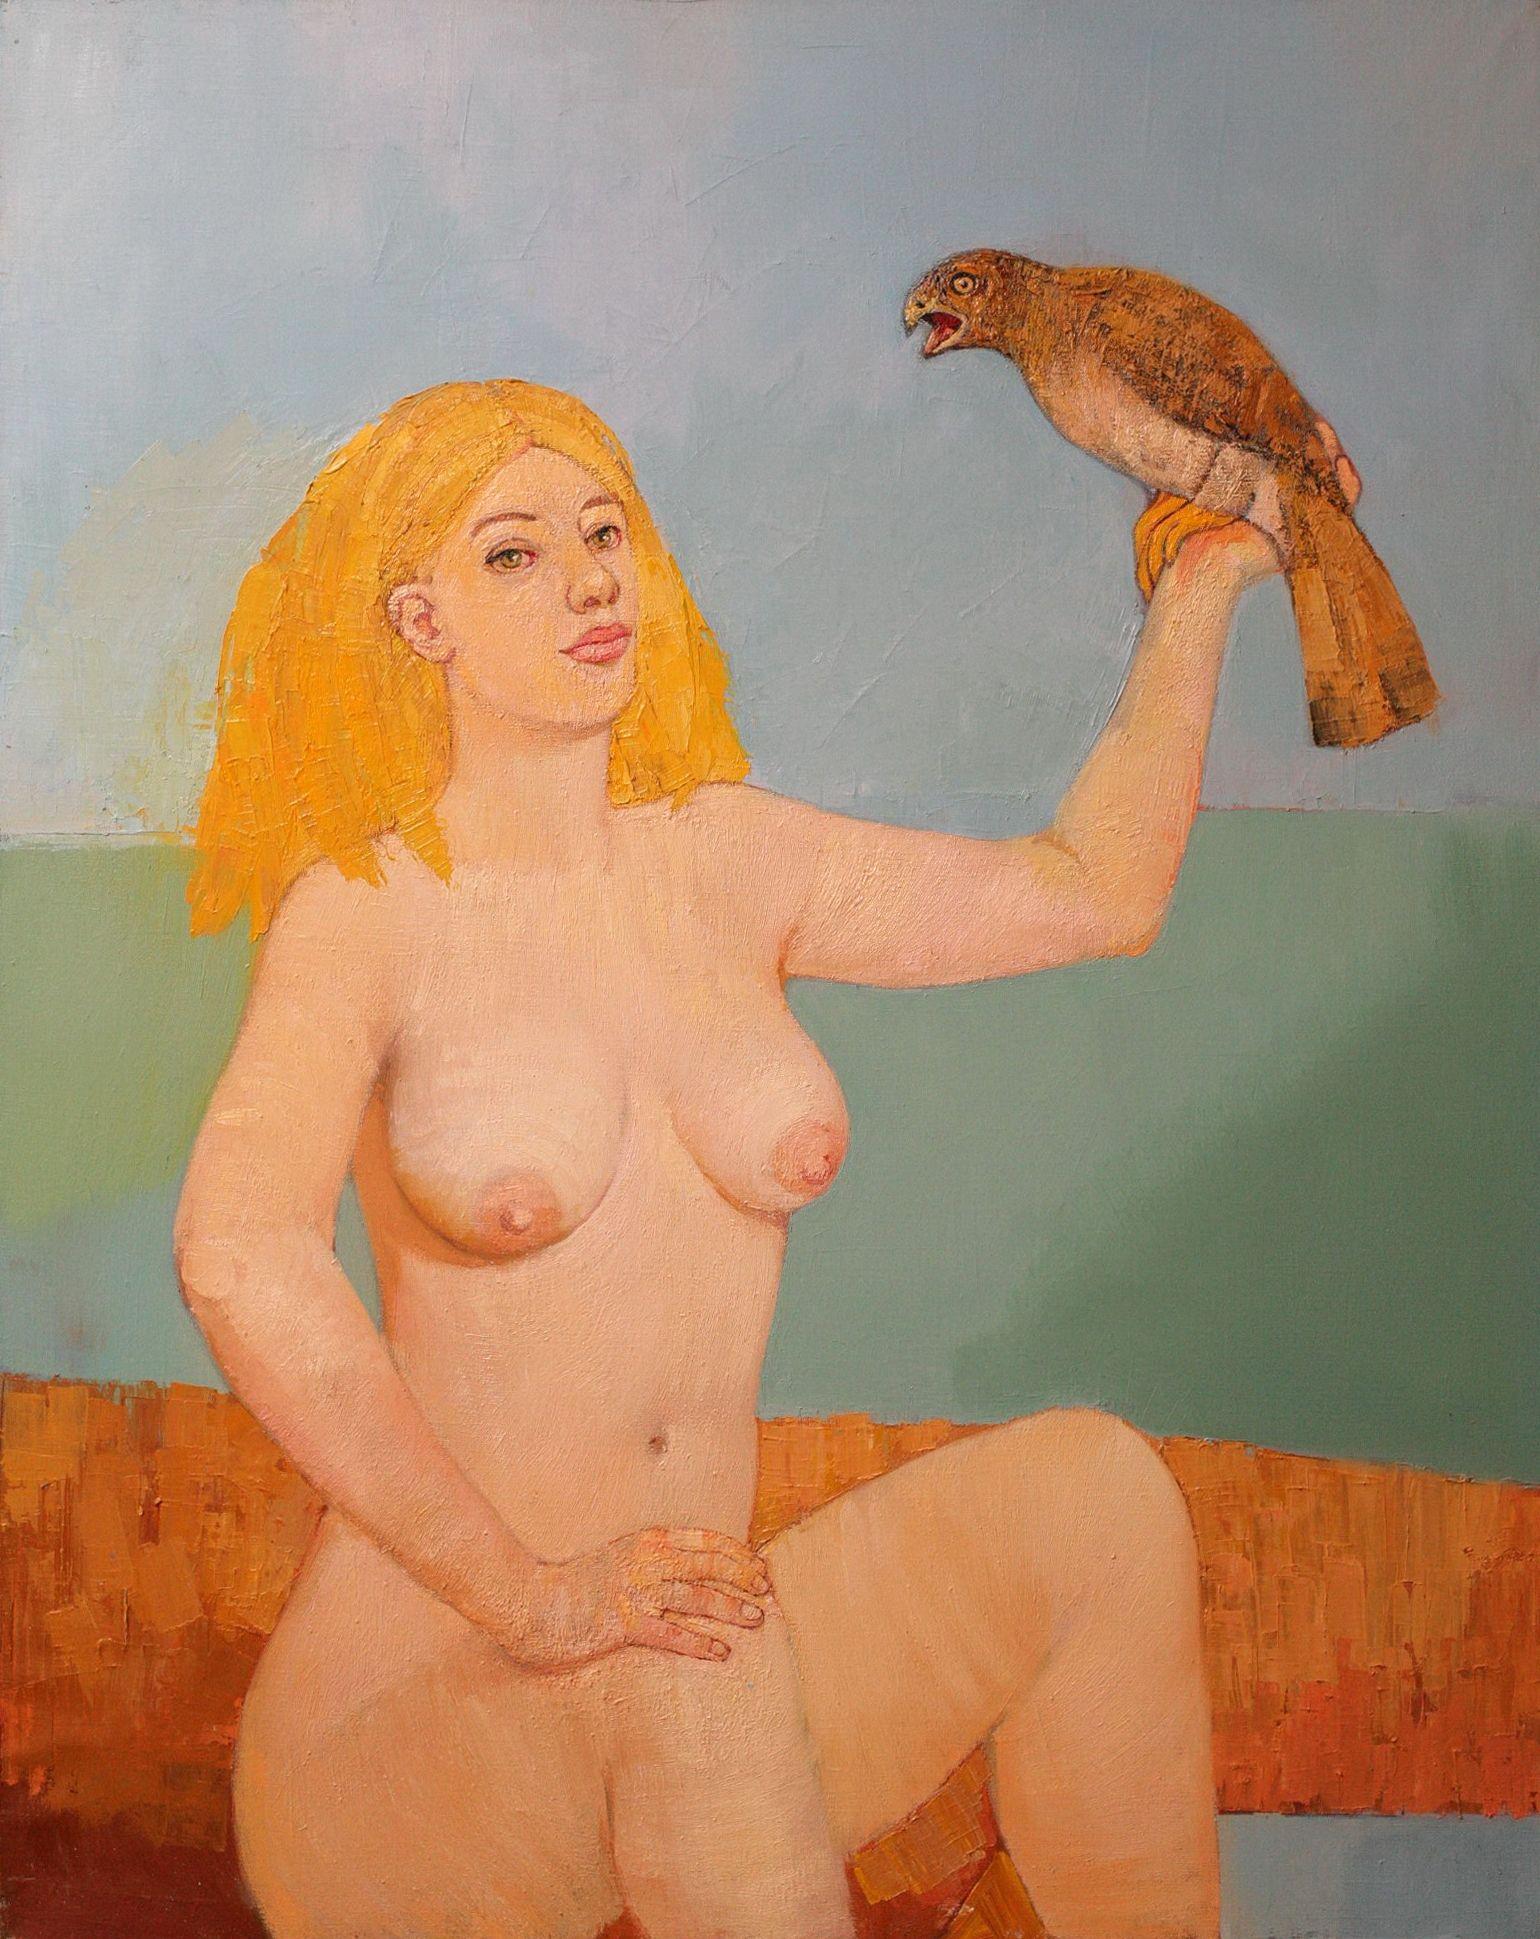 Dagnia Cherevichnika Nude Painting - Girl with a hawk. Oil on canvas, 80x60 cm